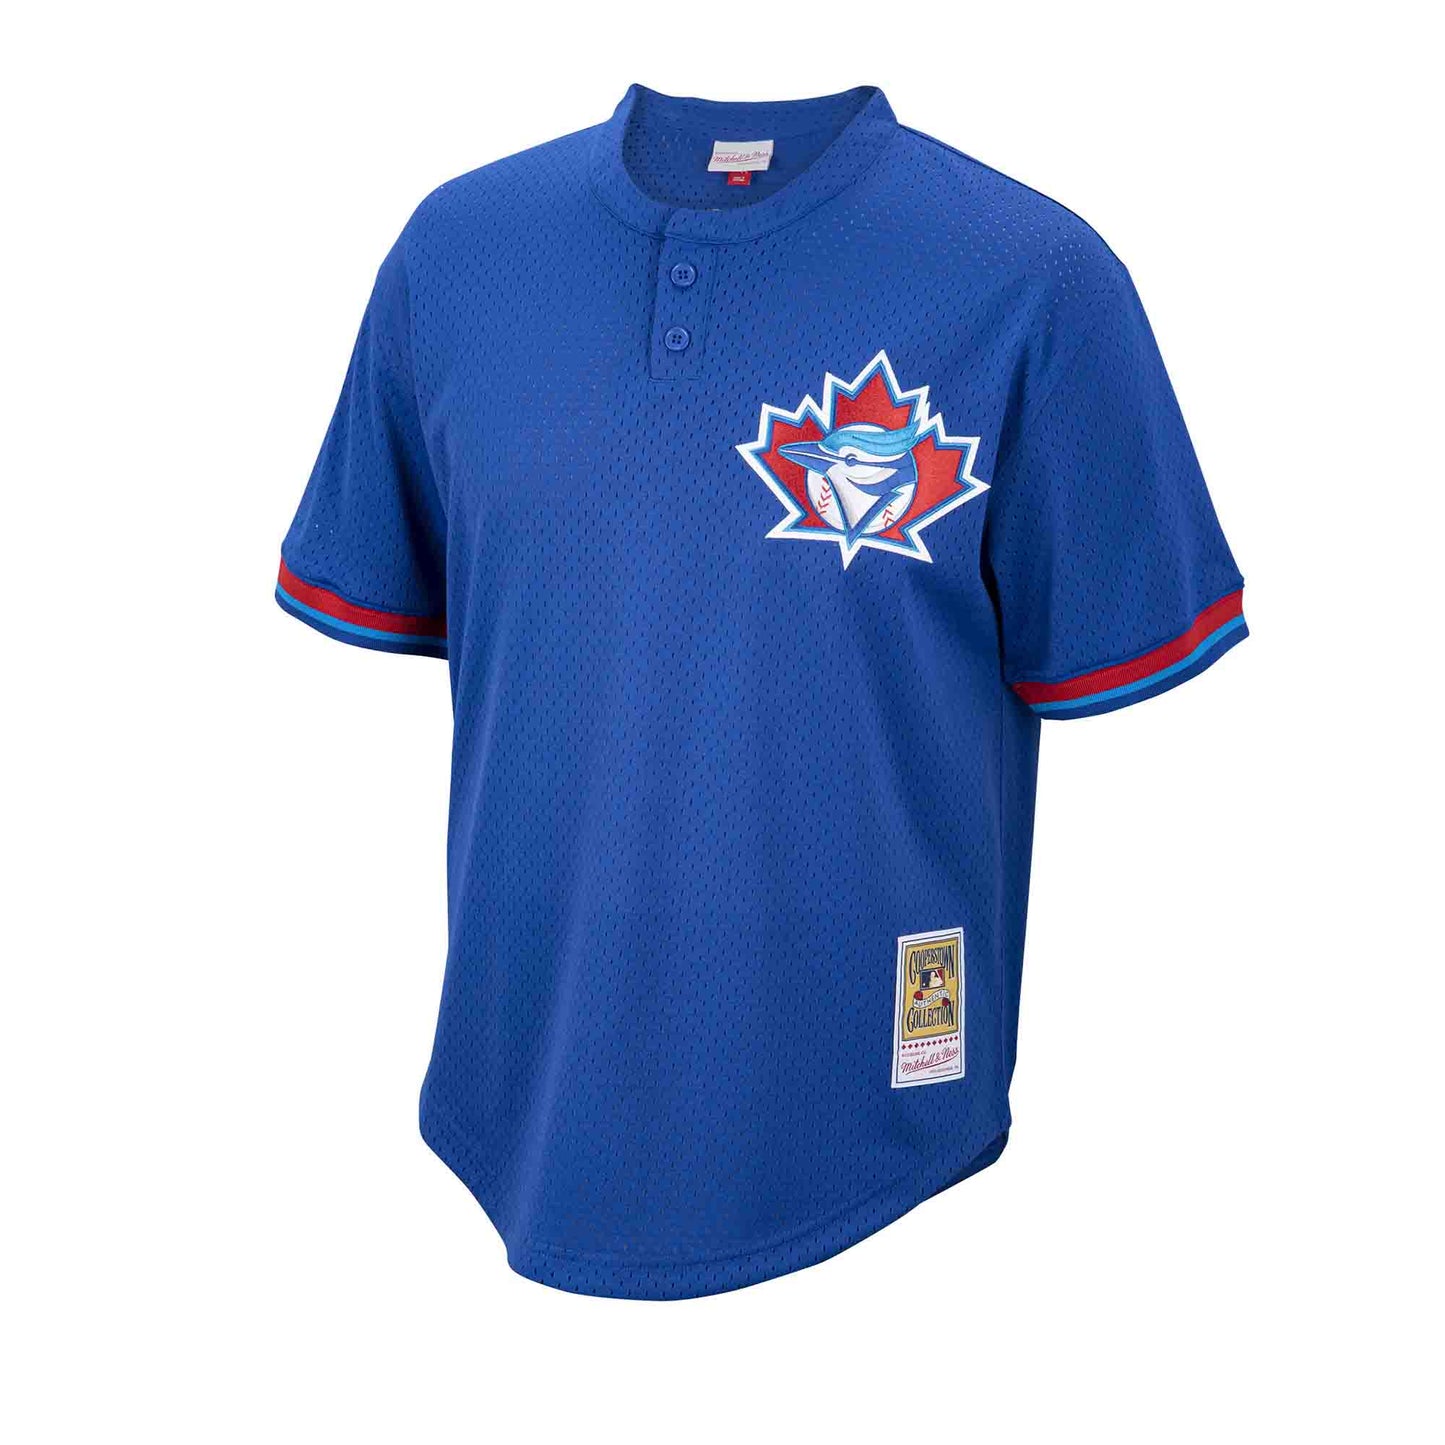 MLB Authentic BP Jersey Toronto Blue Jays Roy Halladay #32